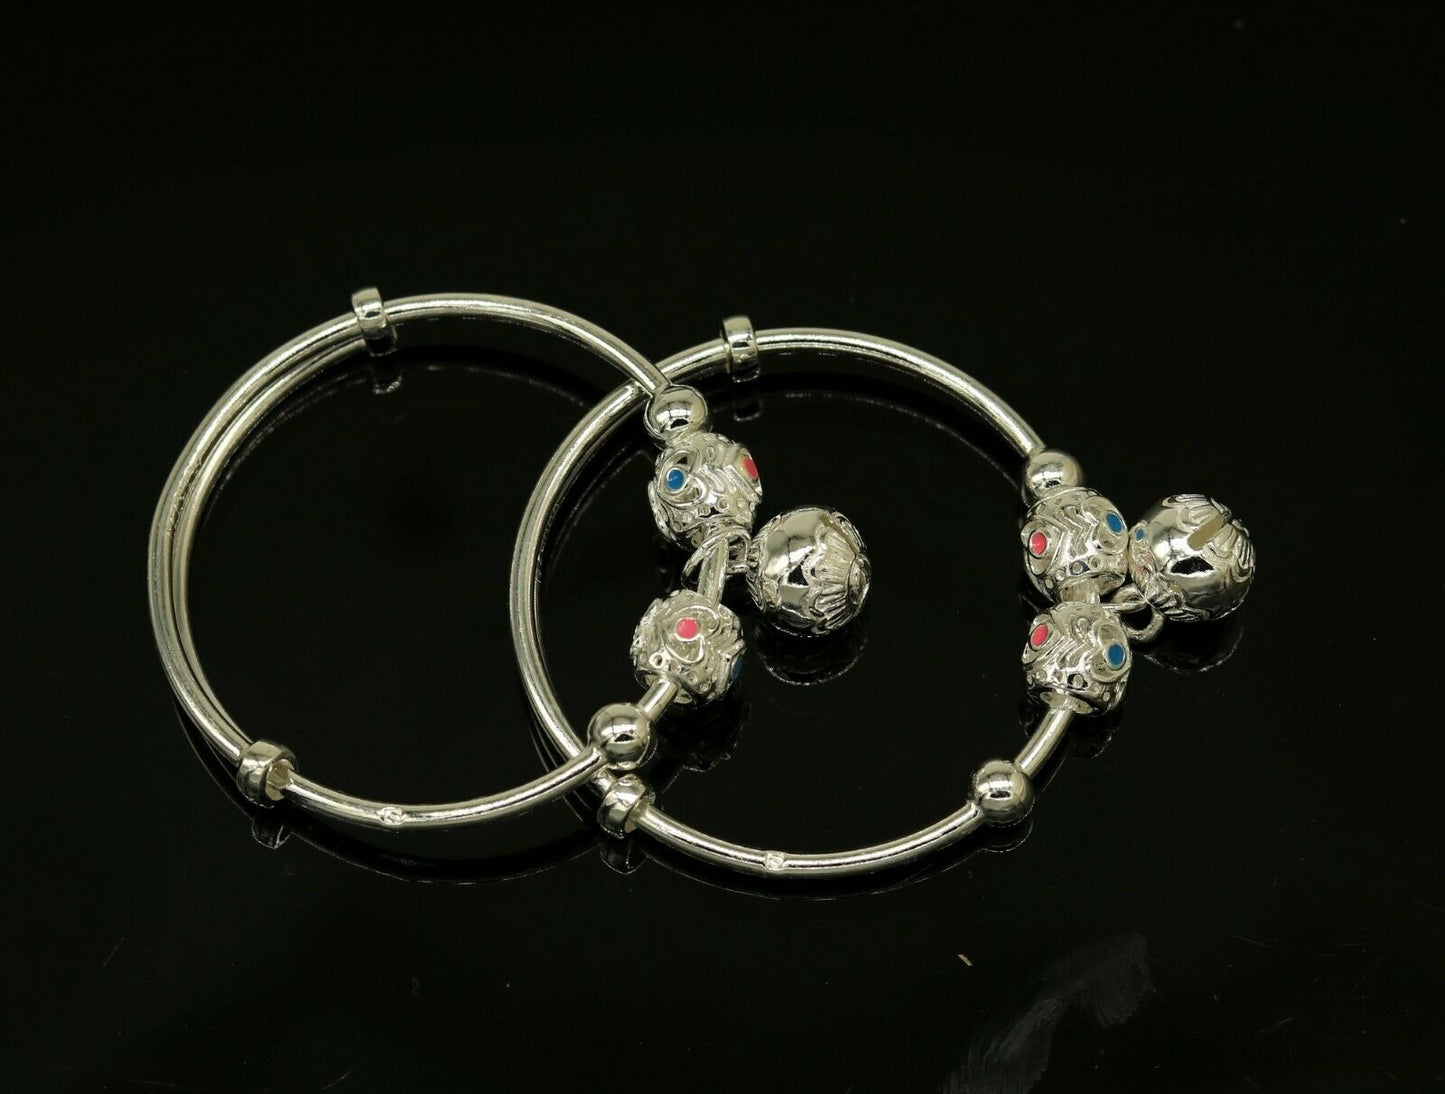 925 sterling silver adjustable charm bangle bracelet kada unisex kids baby bbk30 - TRIBAL ORNAMENTS